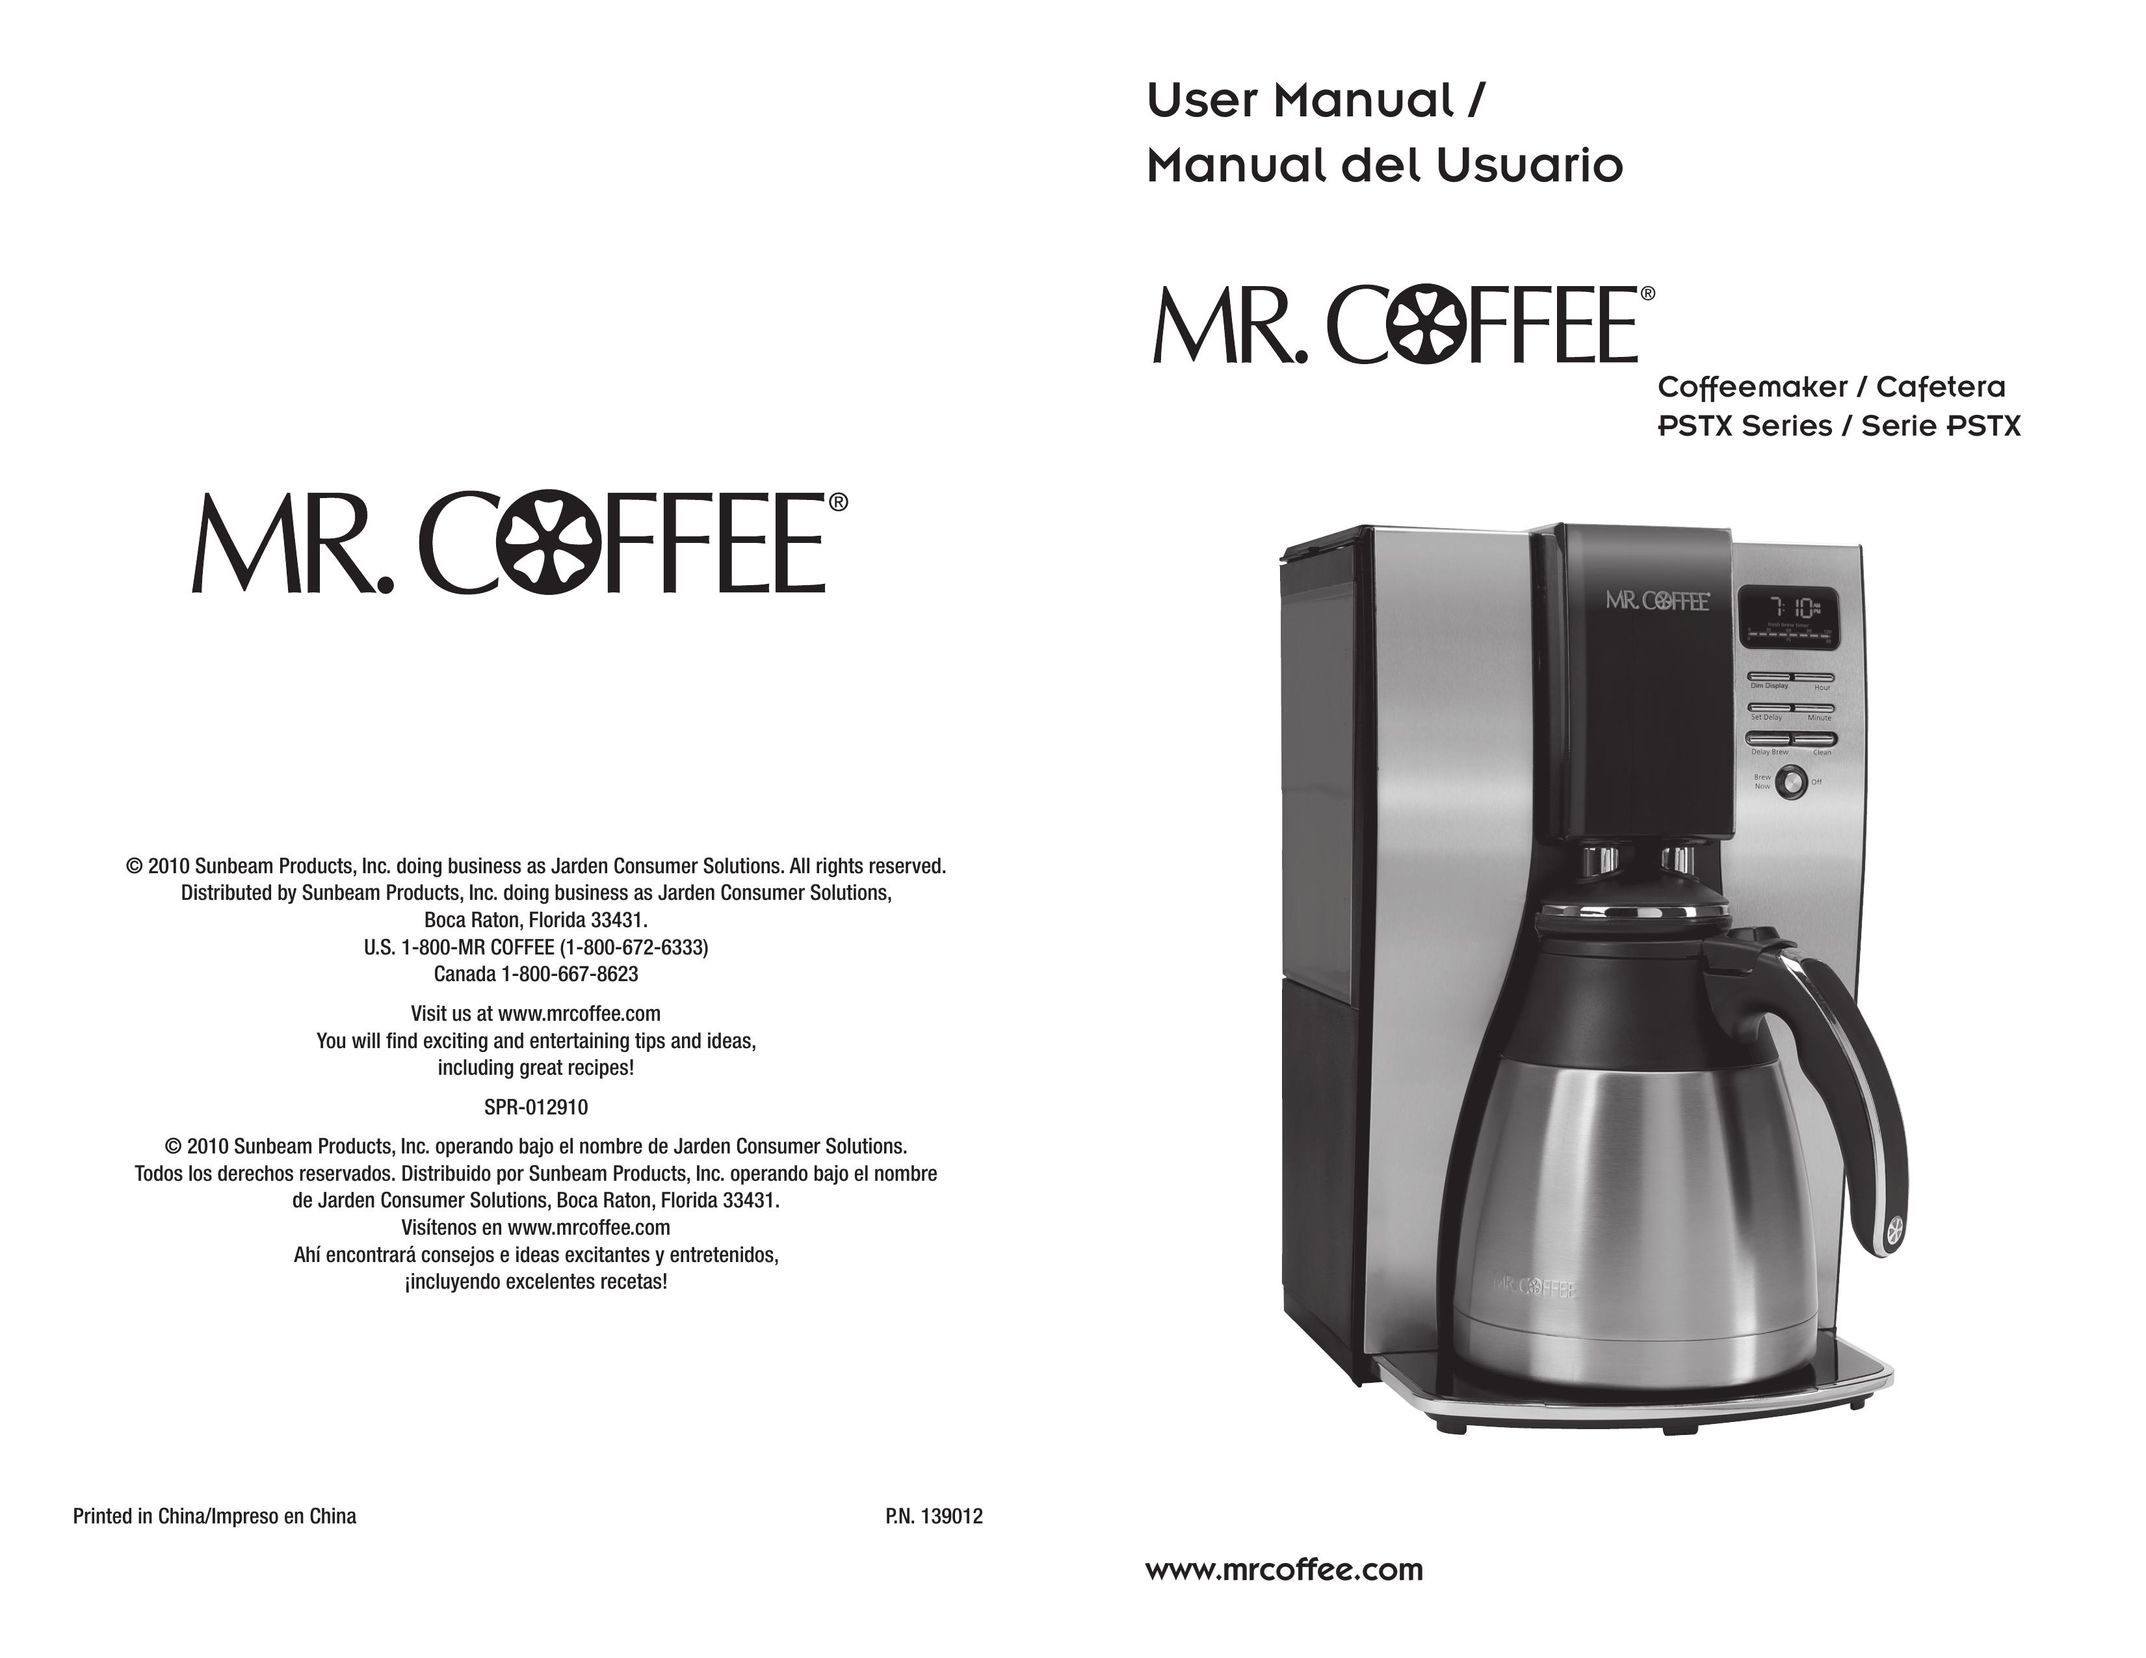 Mr. Coffee BVMC-PSTX91 Coffeemaker User Manual